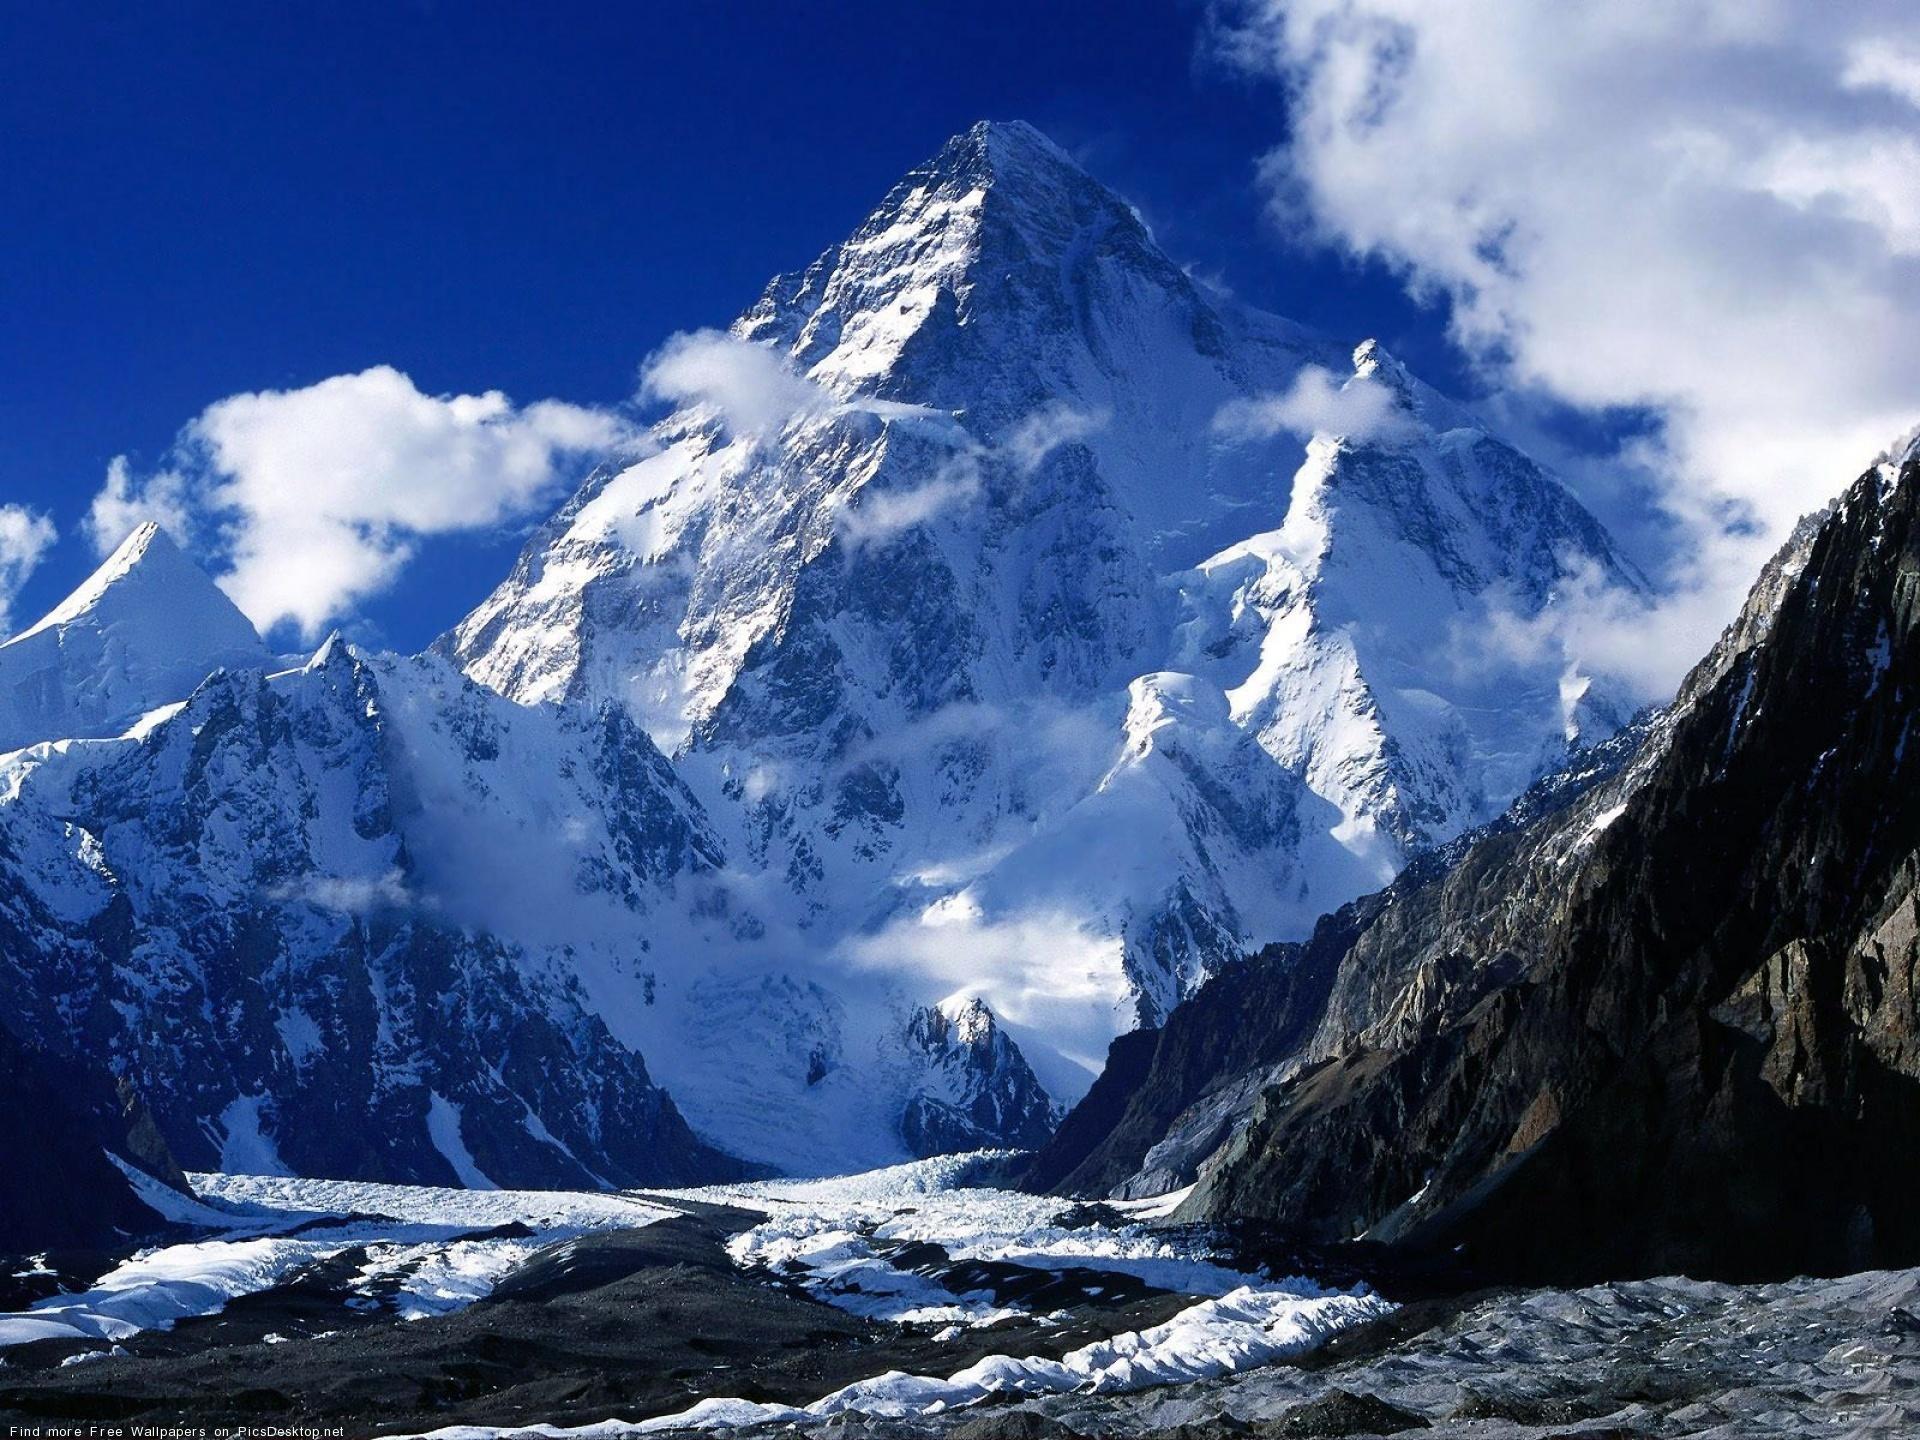 snock rocks mountainscape landscape 5k iPhone 11 Wallpapers Free Download